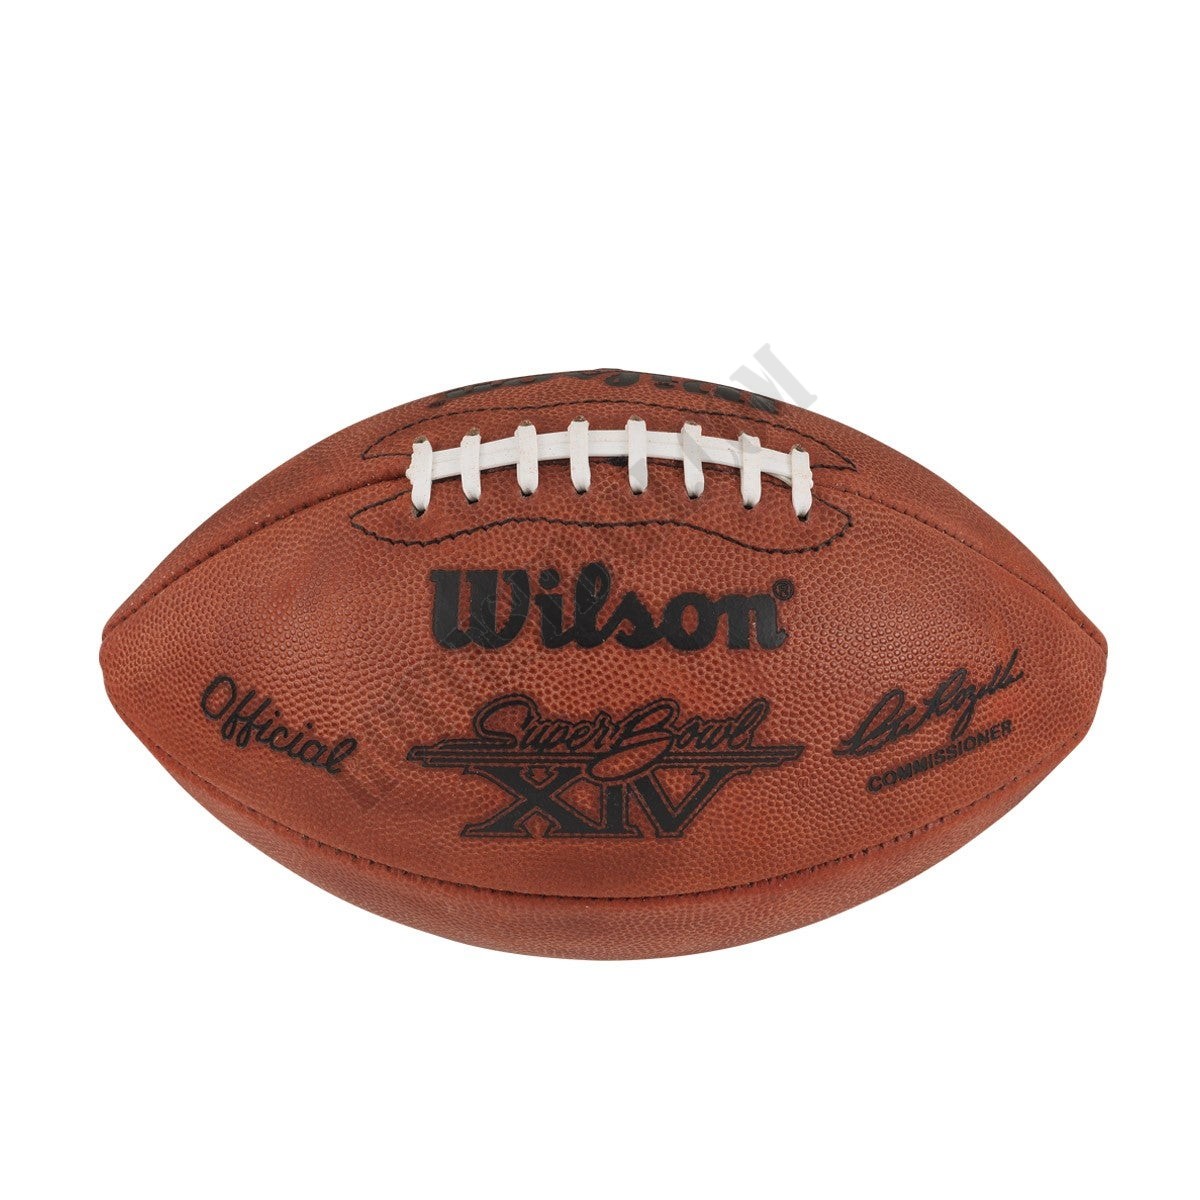 Super Bowl XIV Game Football - Pittsburgh Steelers ● Wilson Promotions - Super Bowl XIV Game Football - Pittsburgh Steelers ● Wilson Promotions